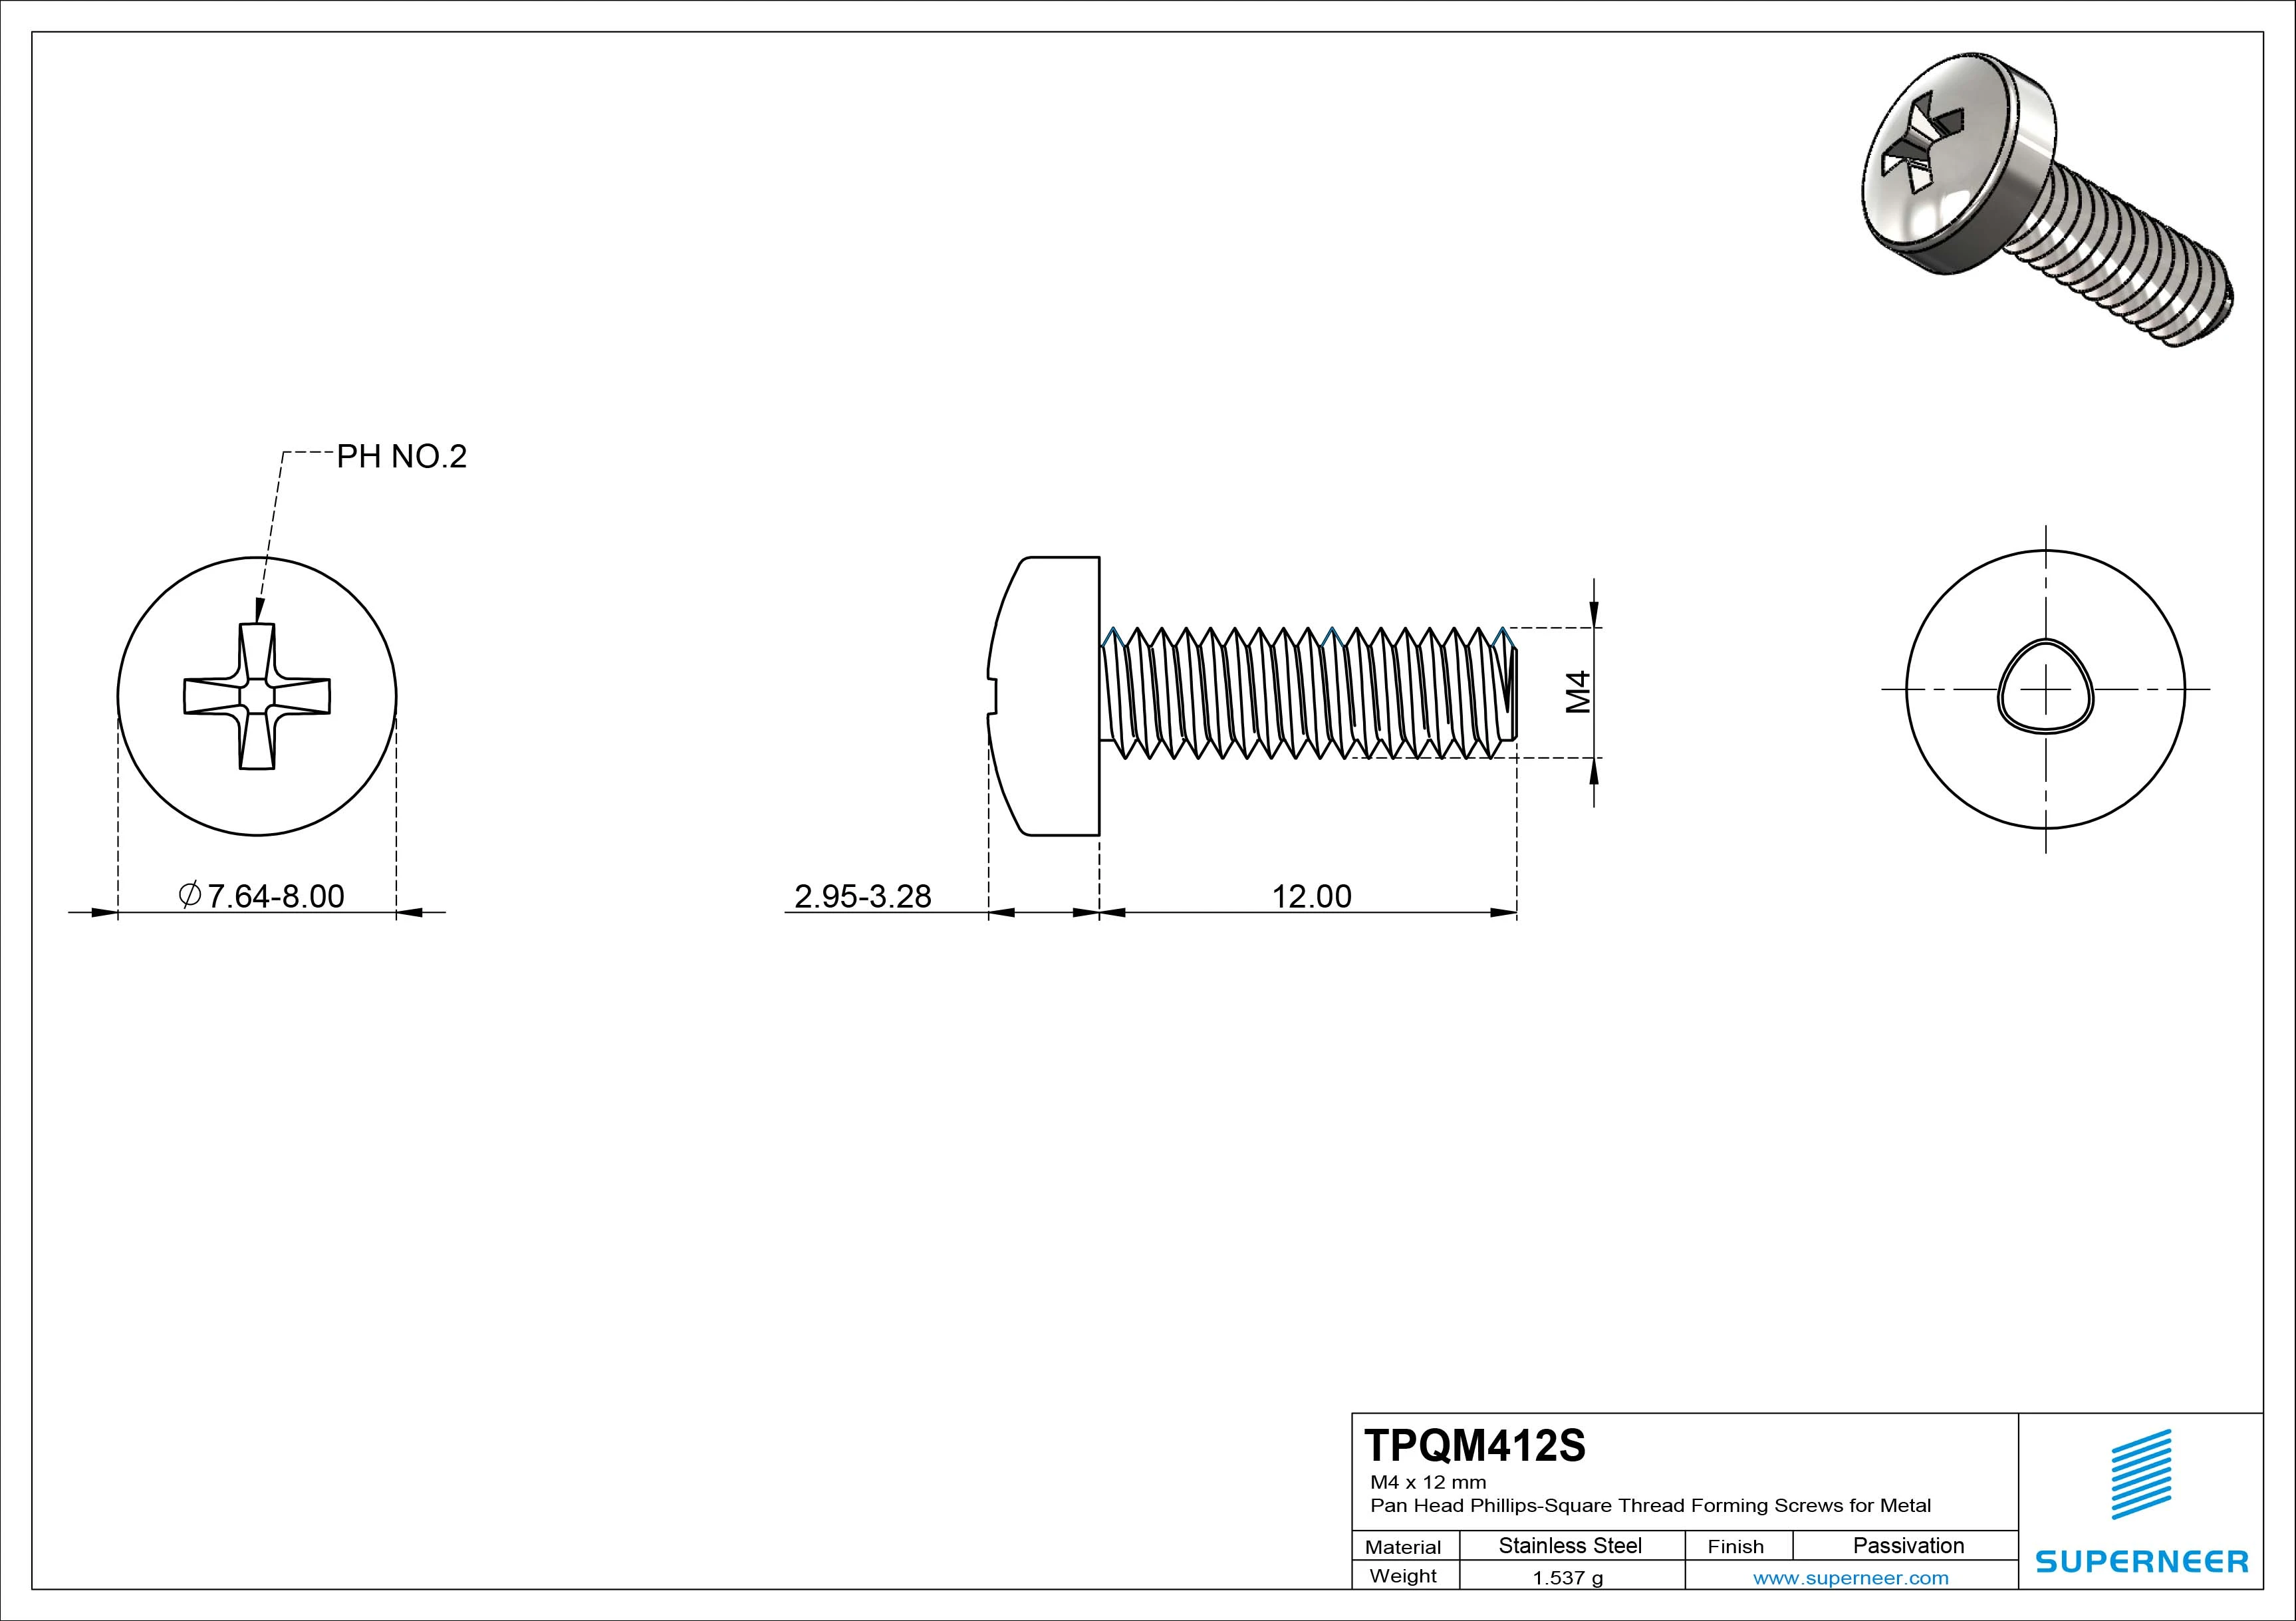 M4 × 12mm Pan Head Phillips-Square Thread Forming Screws for Metal SUS304 Stainless Steel Inox